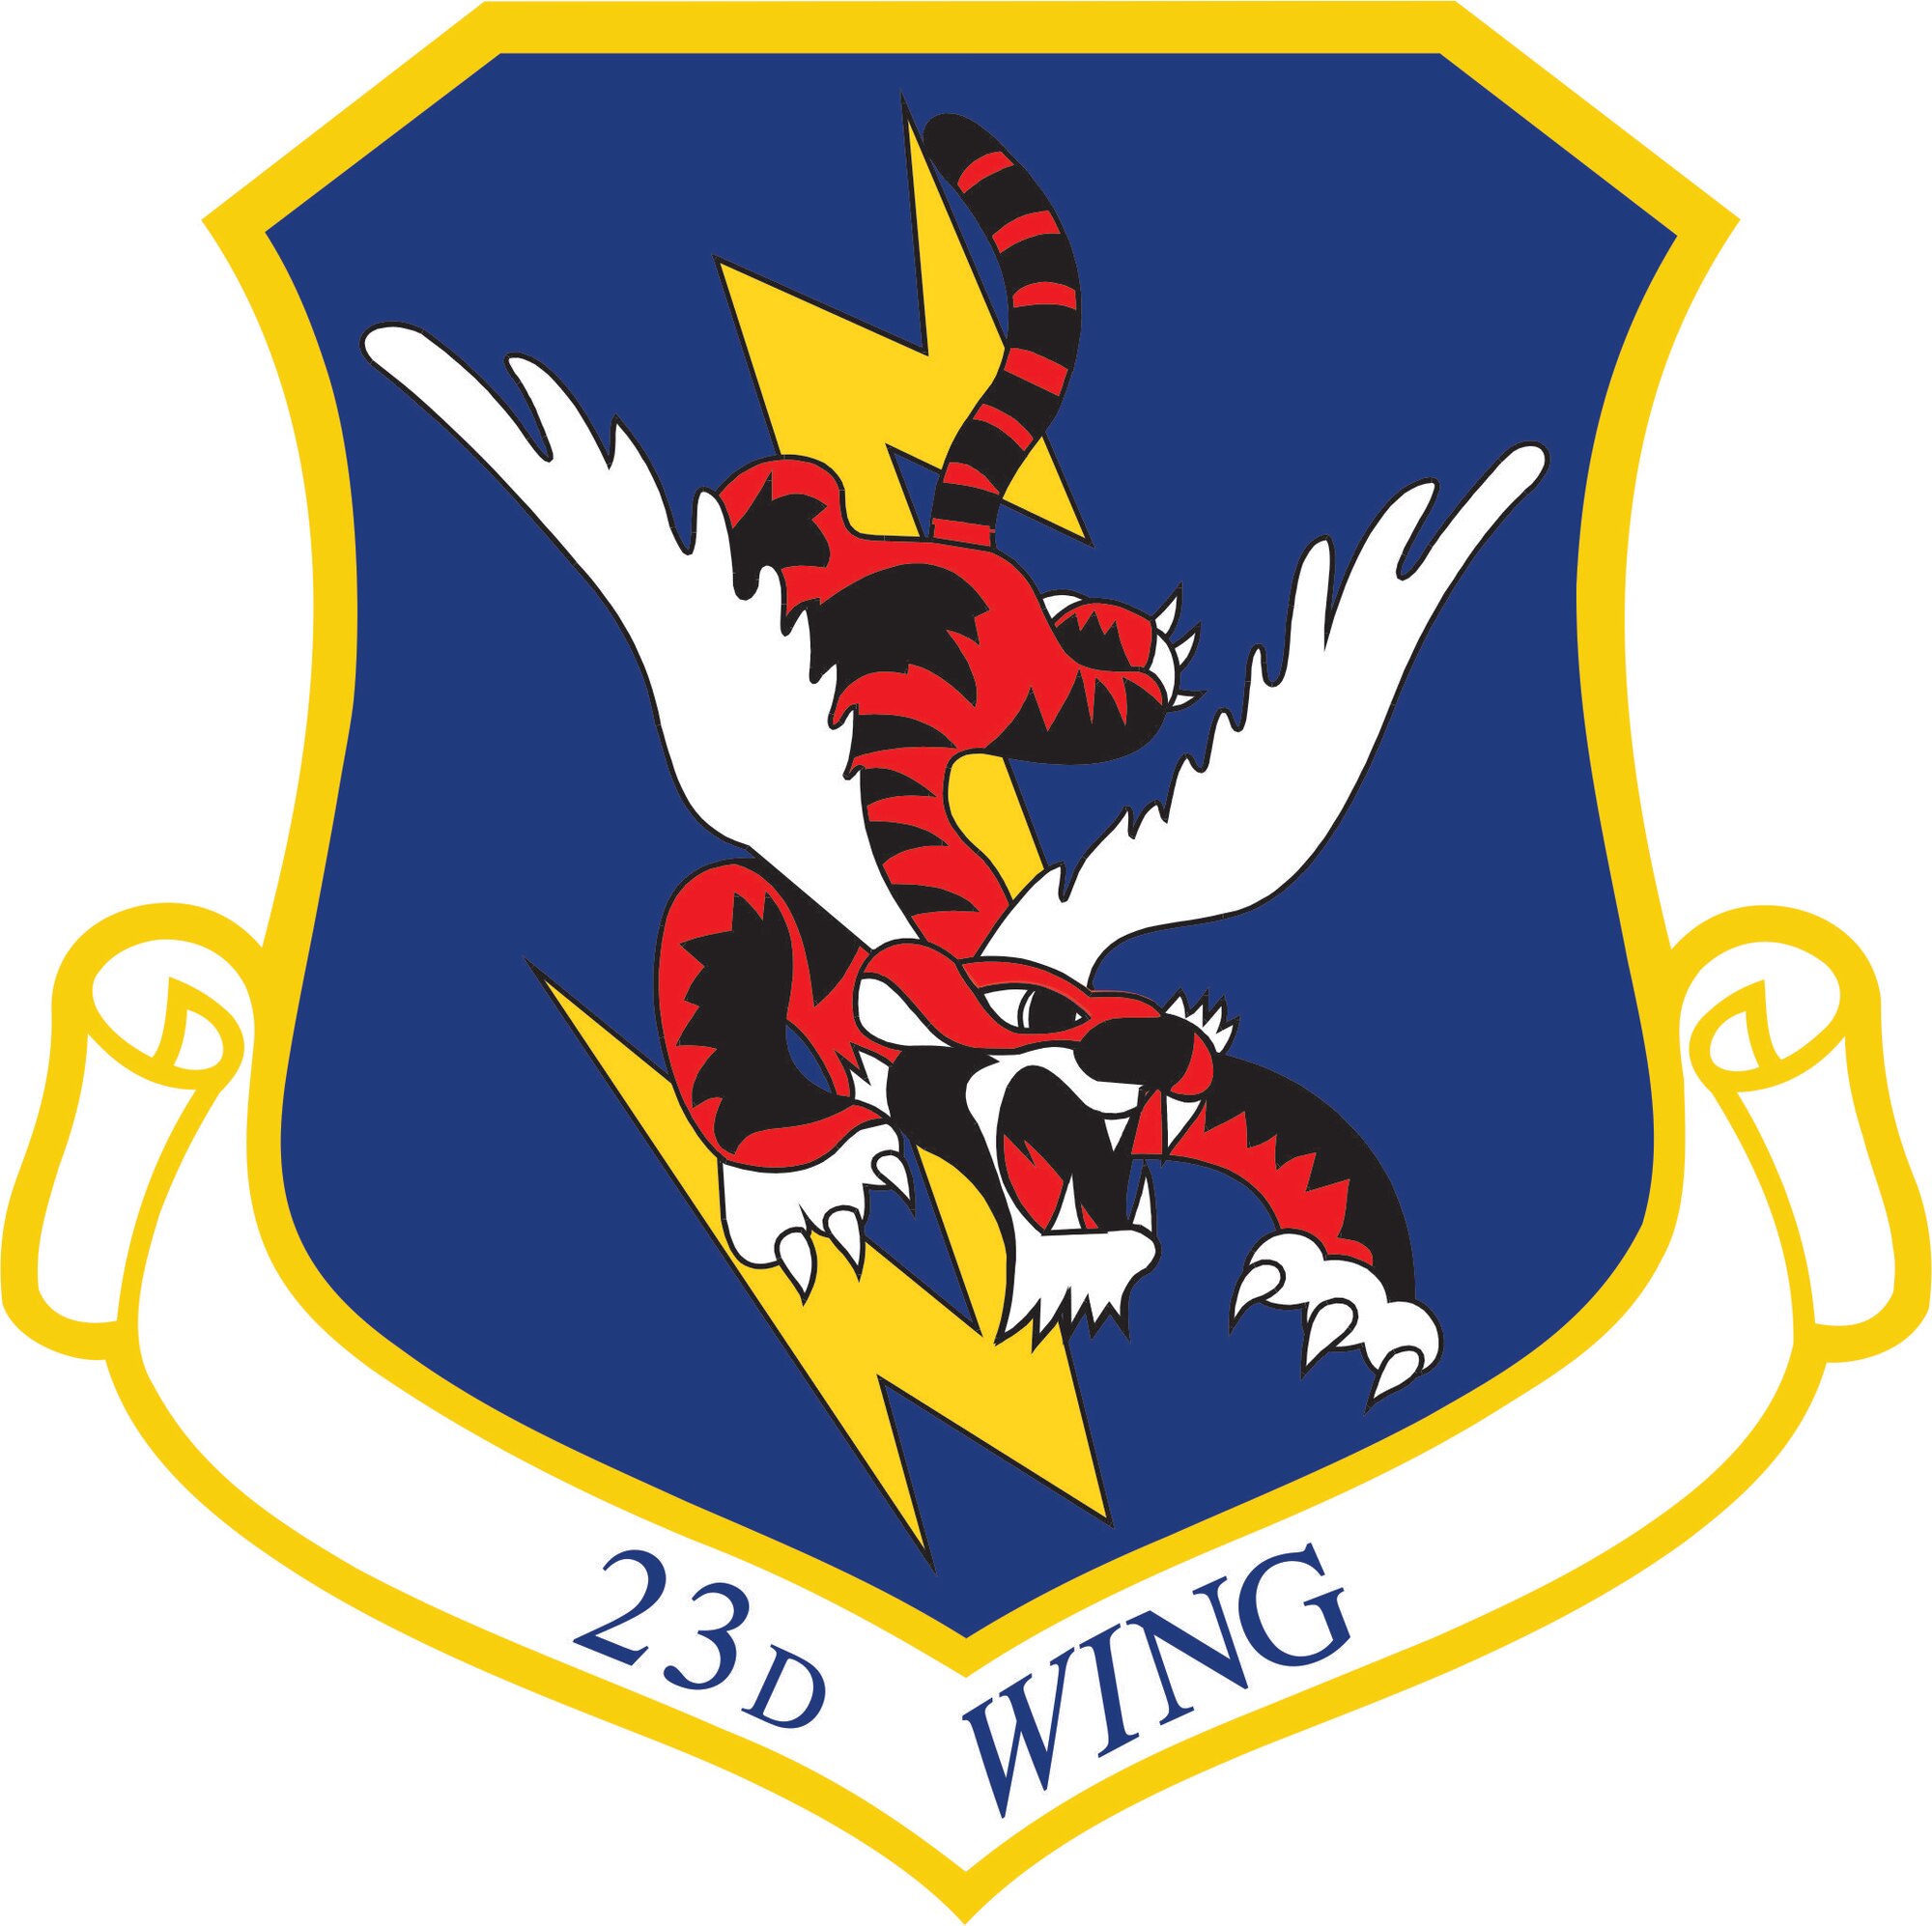 23rd Wing Shield